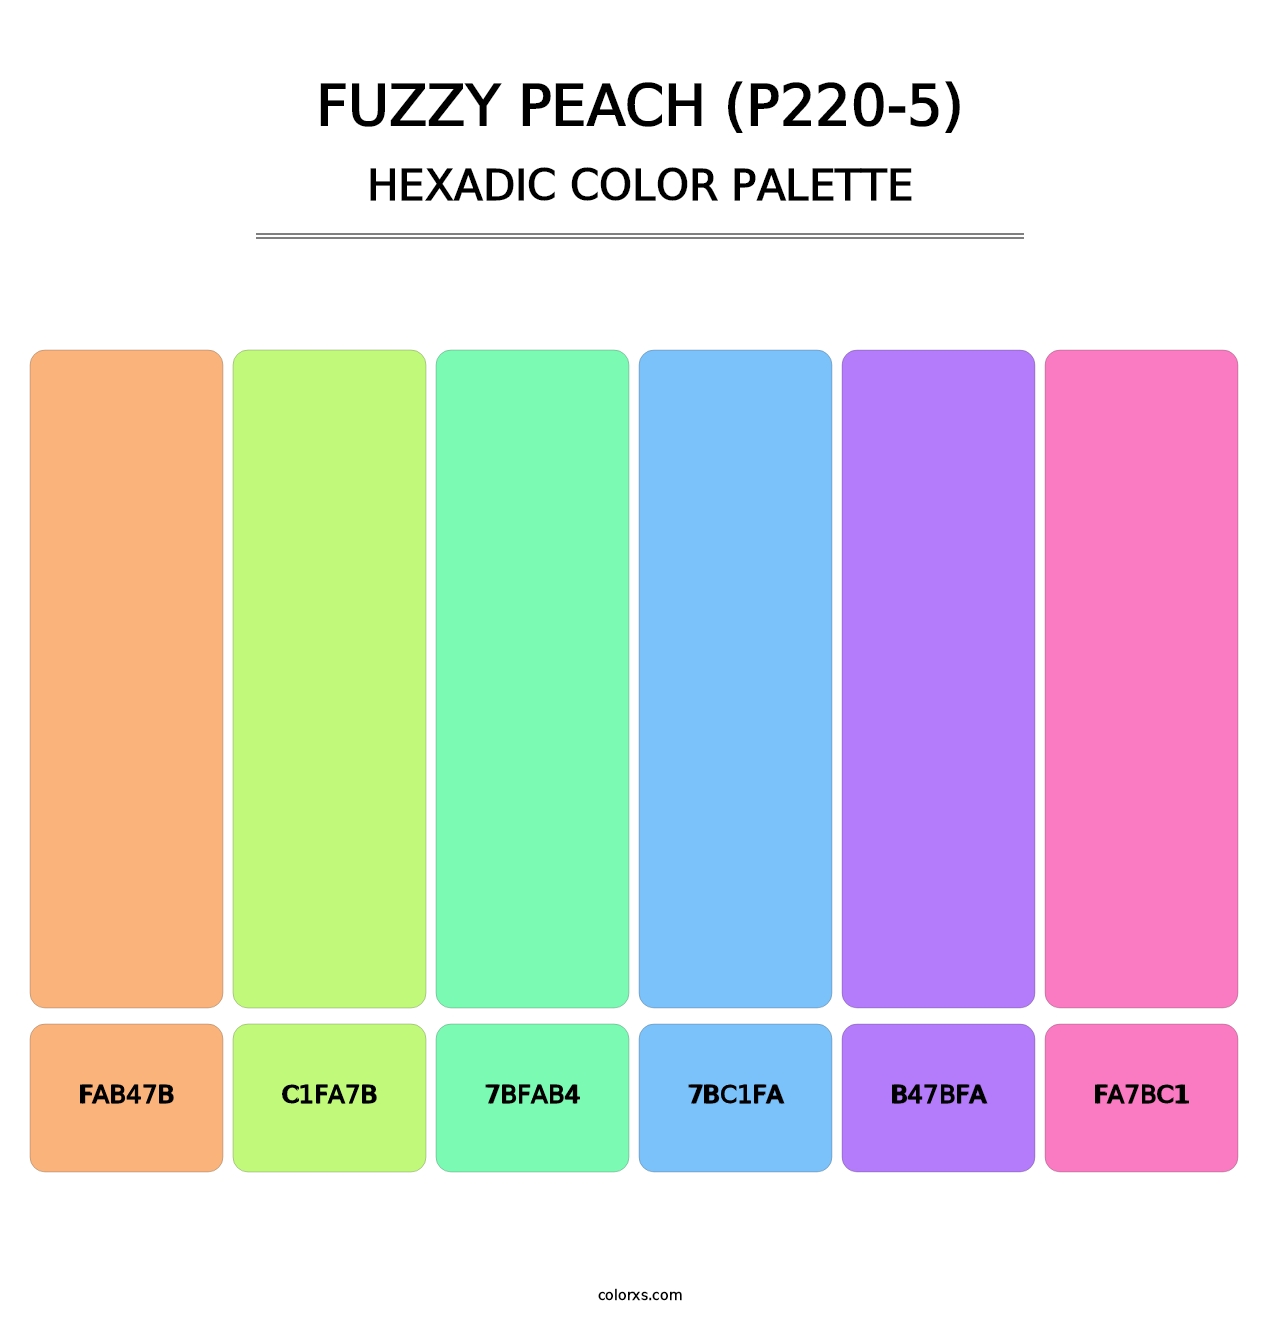 Fuzzy Peach (P220-5) - Hexadic Color Palette